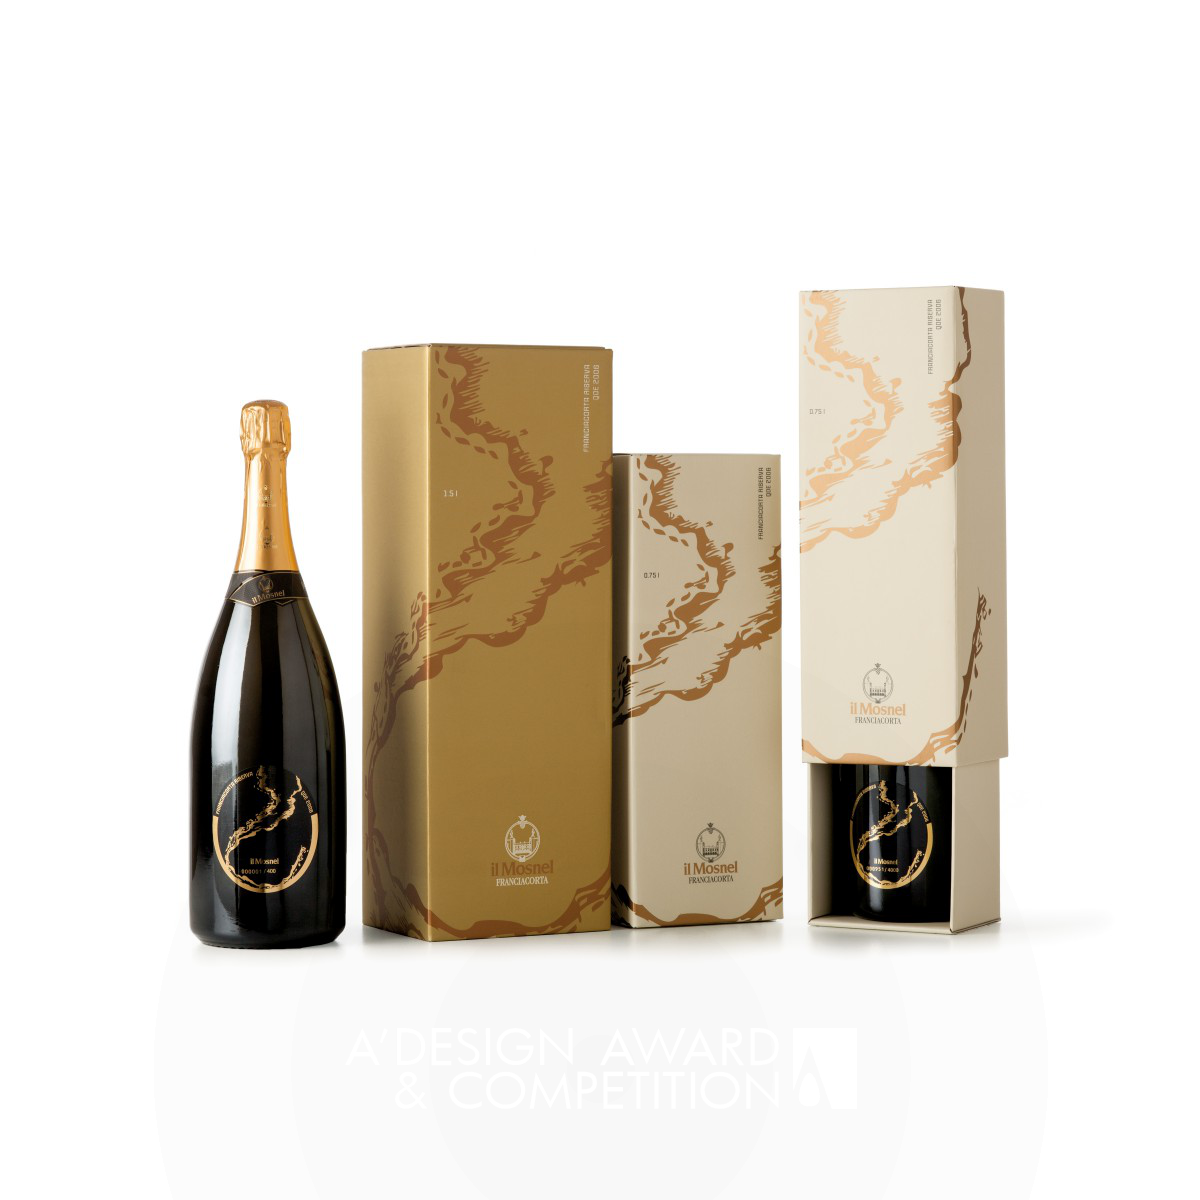 Il Mosnel QdE 2012 Sparkling Wine Label and Pack Design